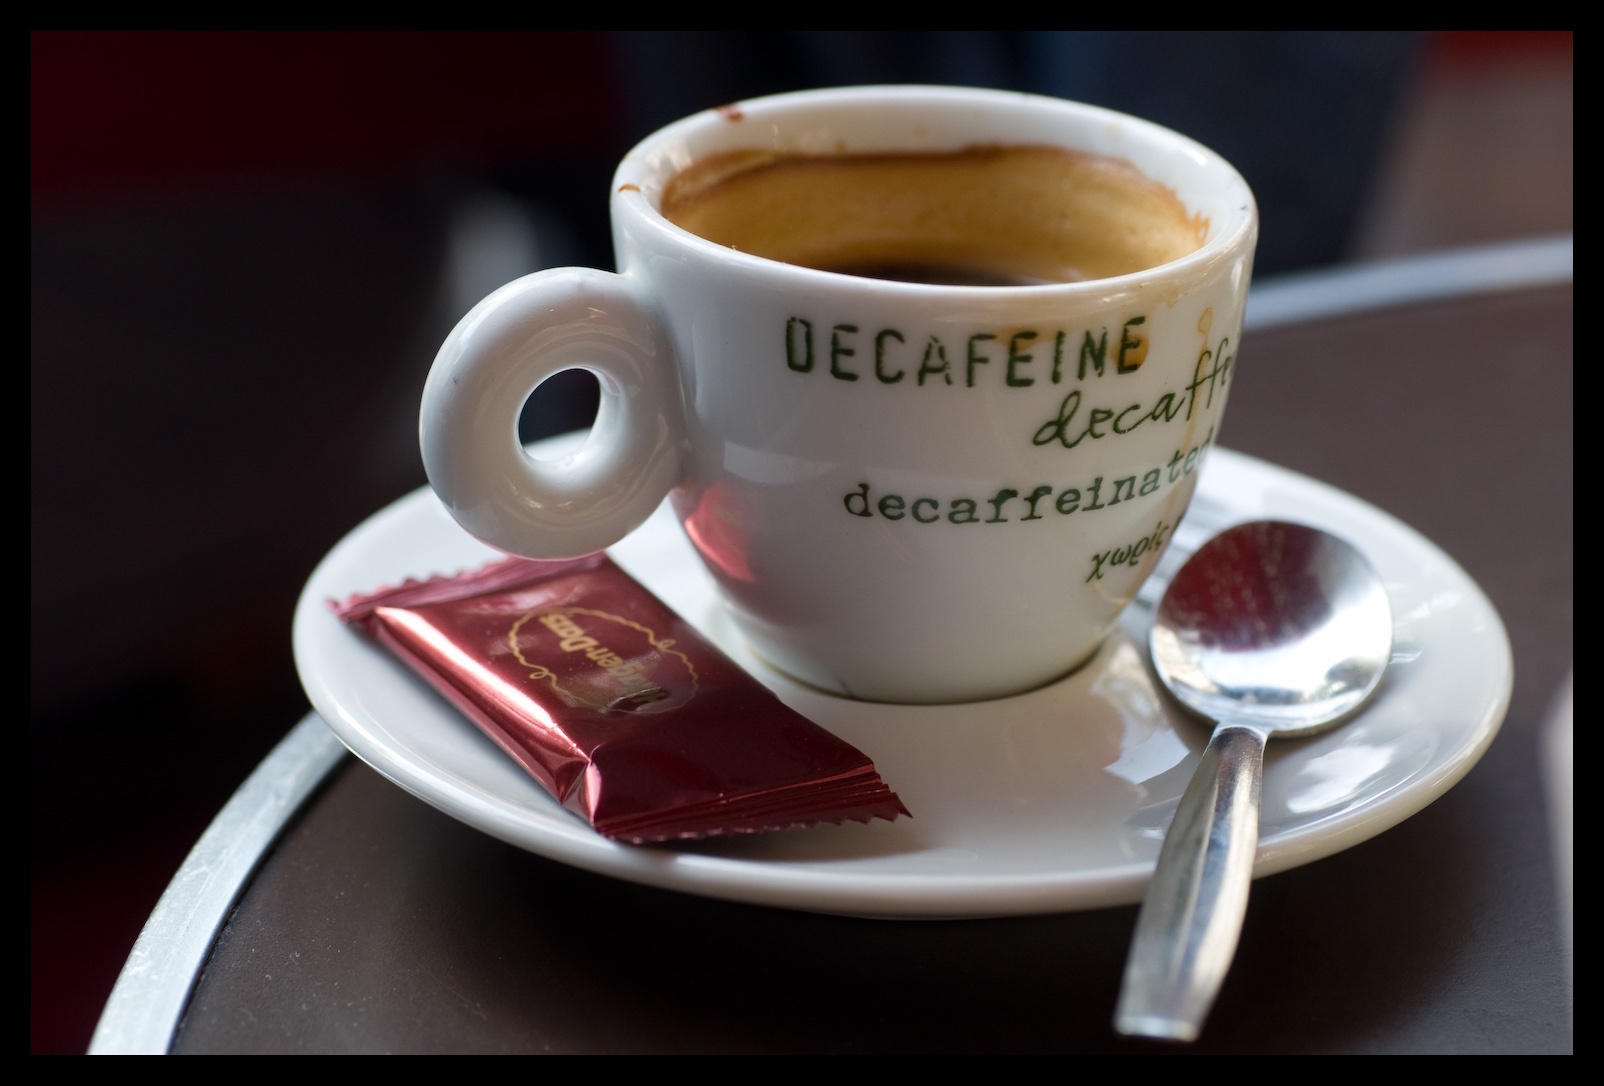 Decaf espresso